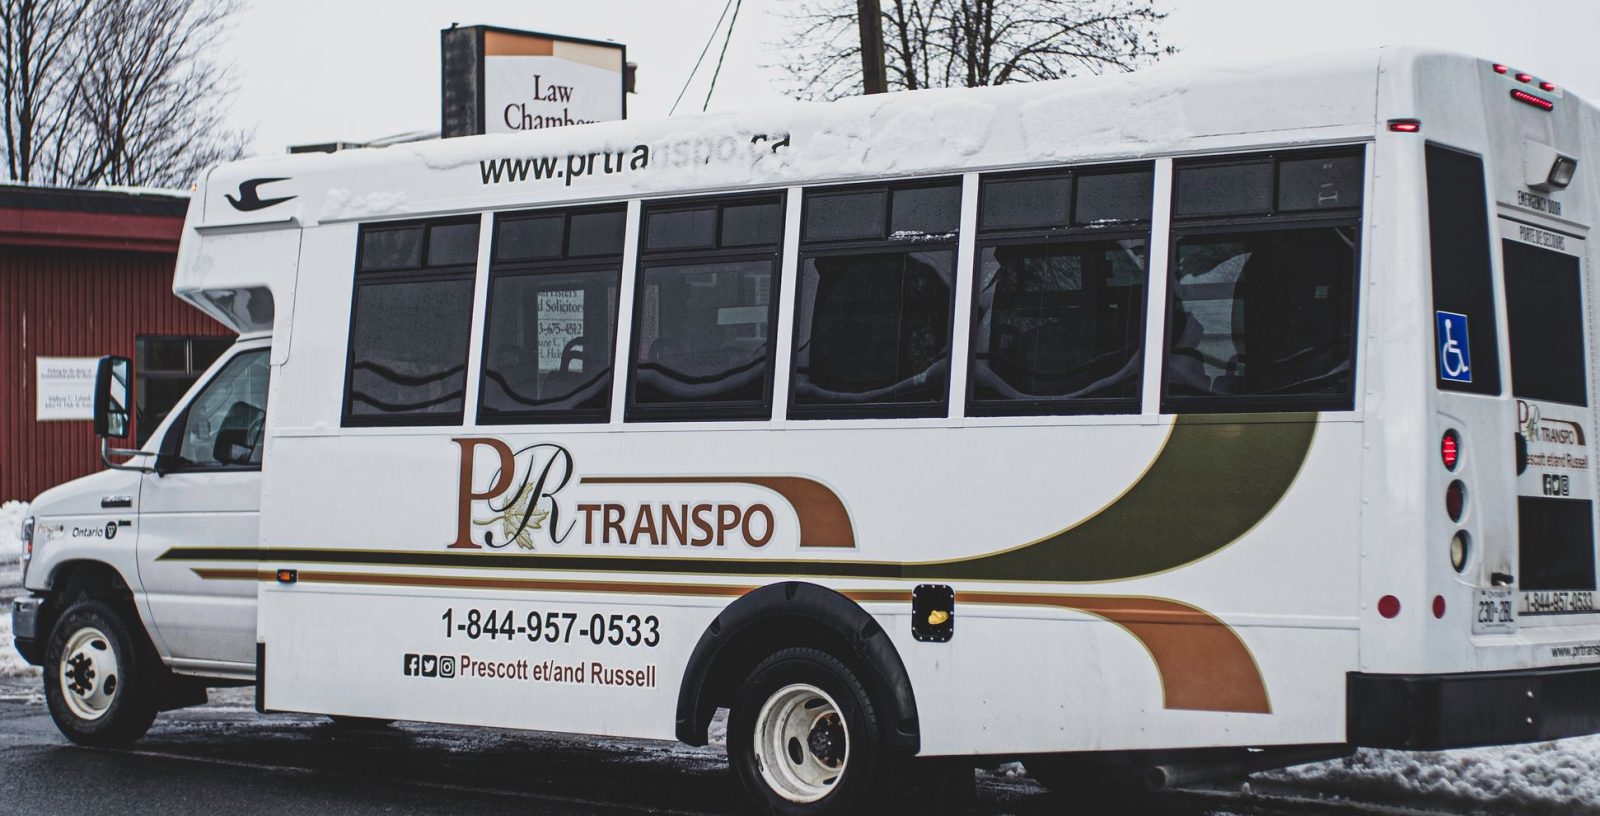 PR Transpo’s temporary suspension extended